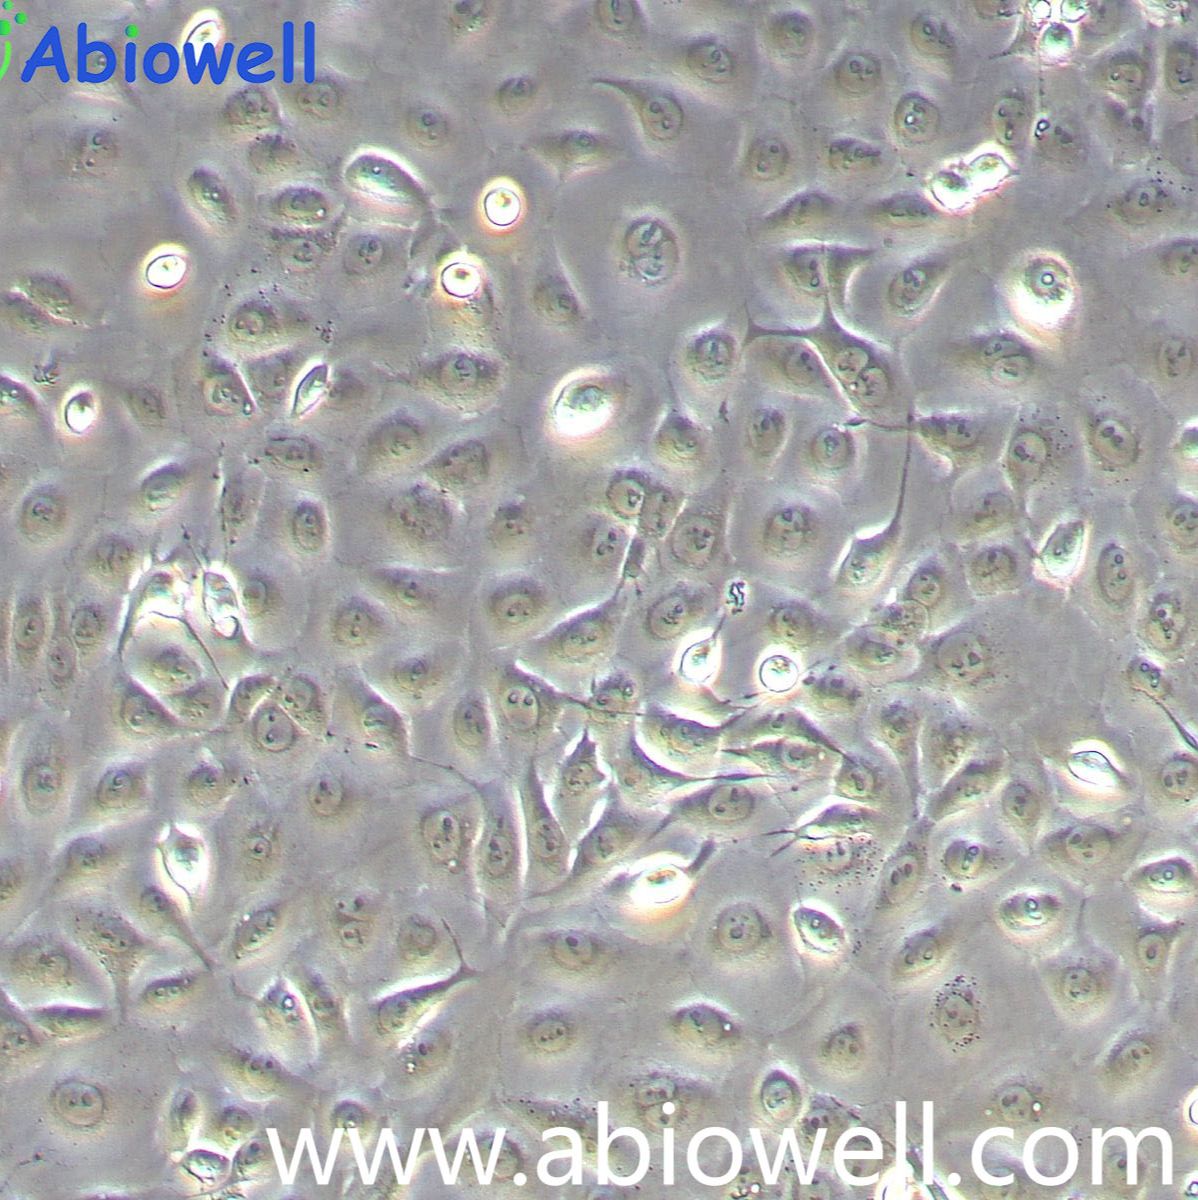 NCI-H1650[H1650]（MKN-1）人非小细胞肺癌细胞